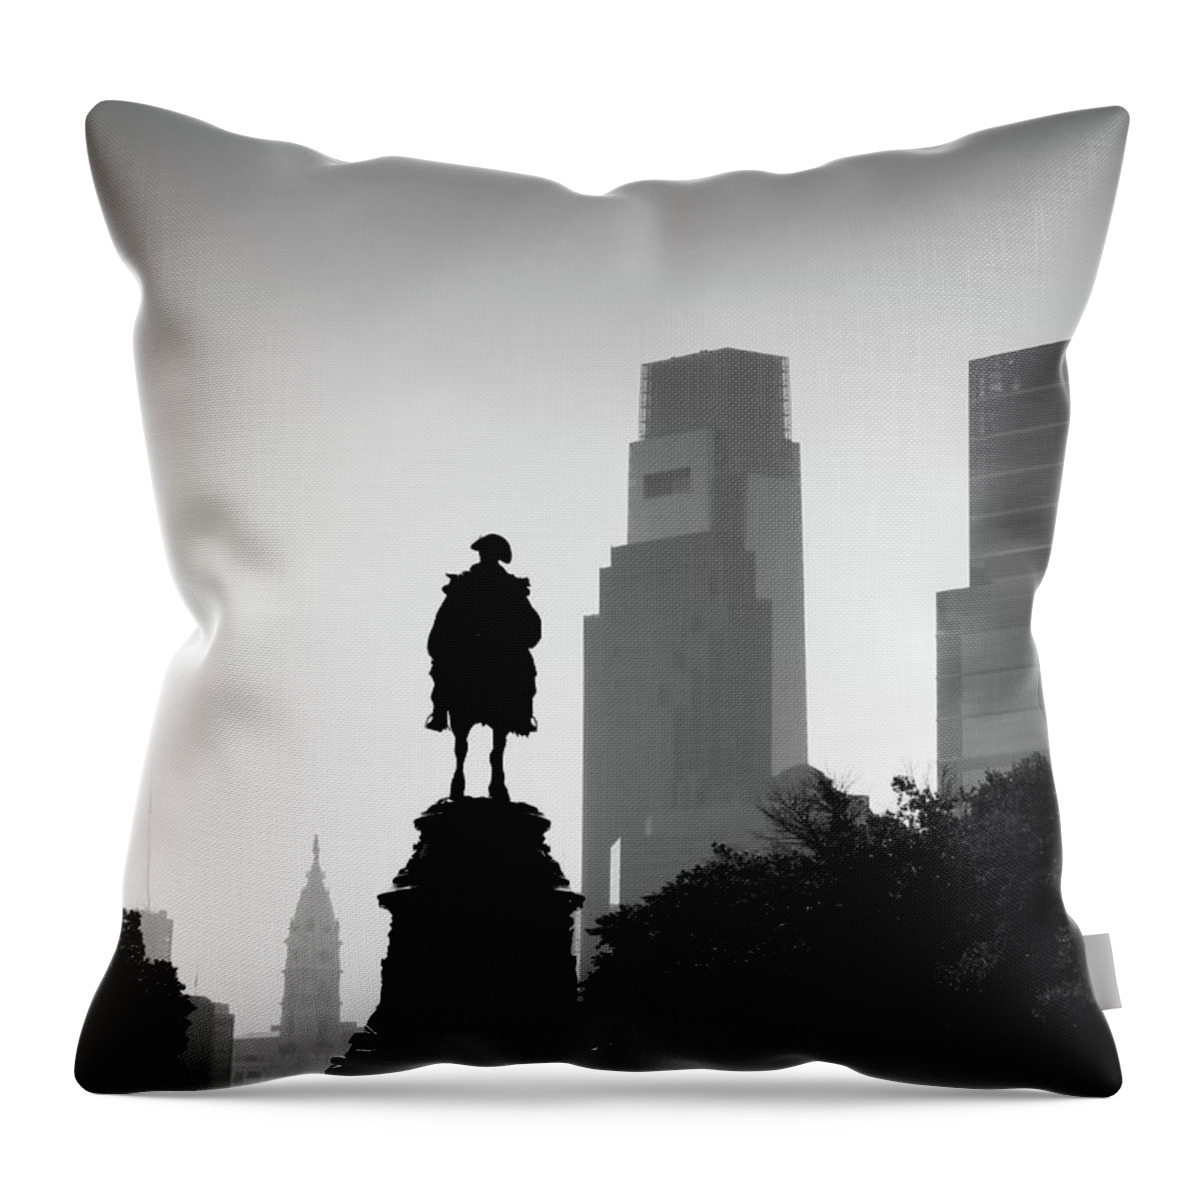 Philadelphia Throw Pillow featuring the photograph Philadelphia Skyline by Connor Beekman